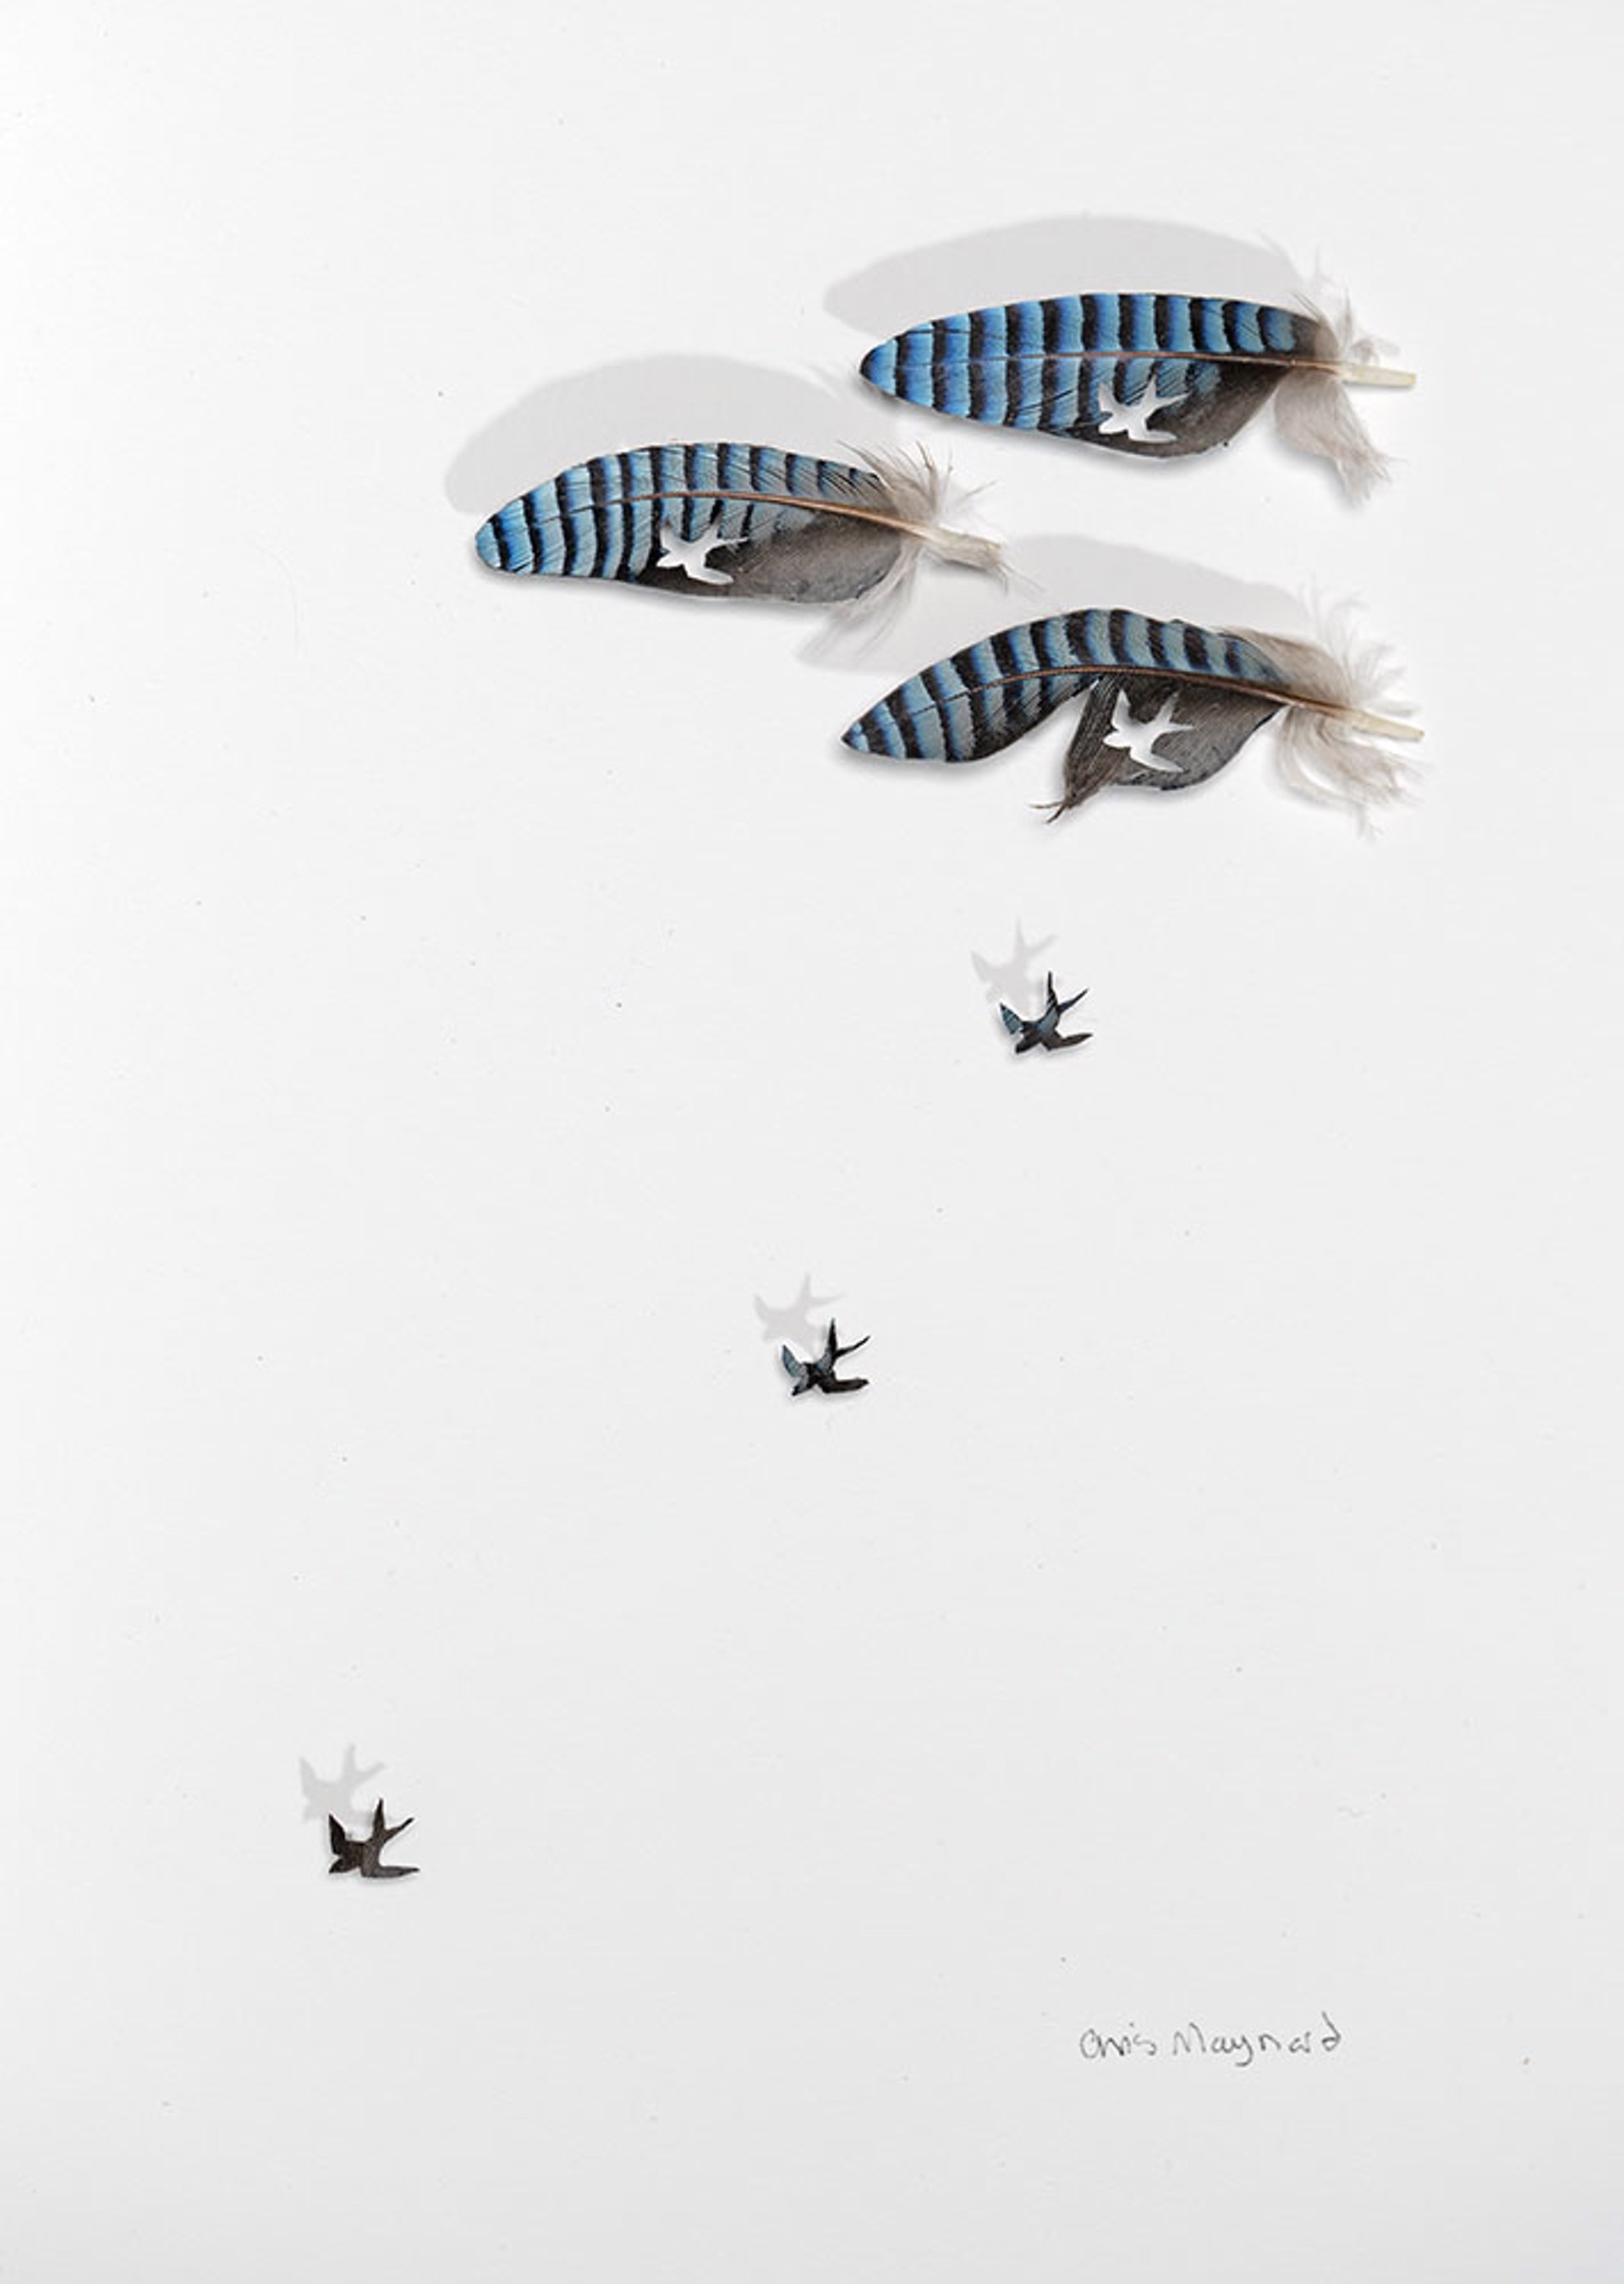 The Three Little Swallows by Chris Maynard